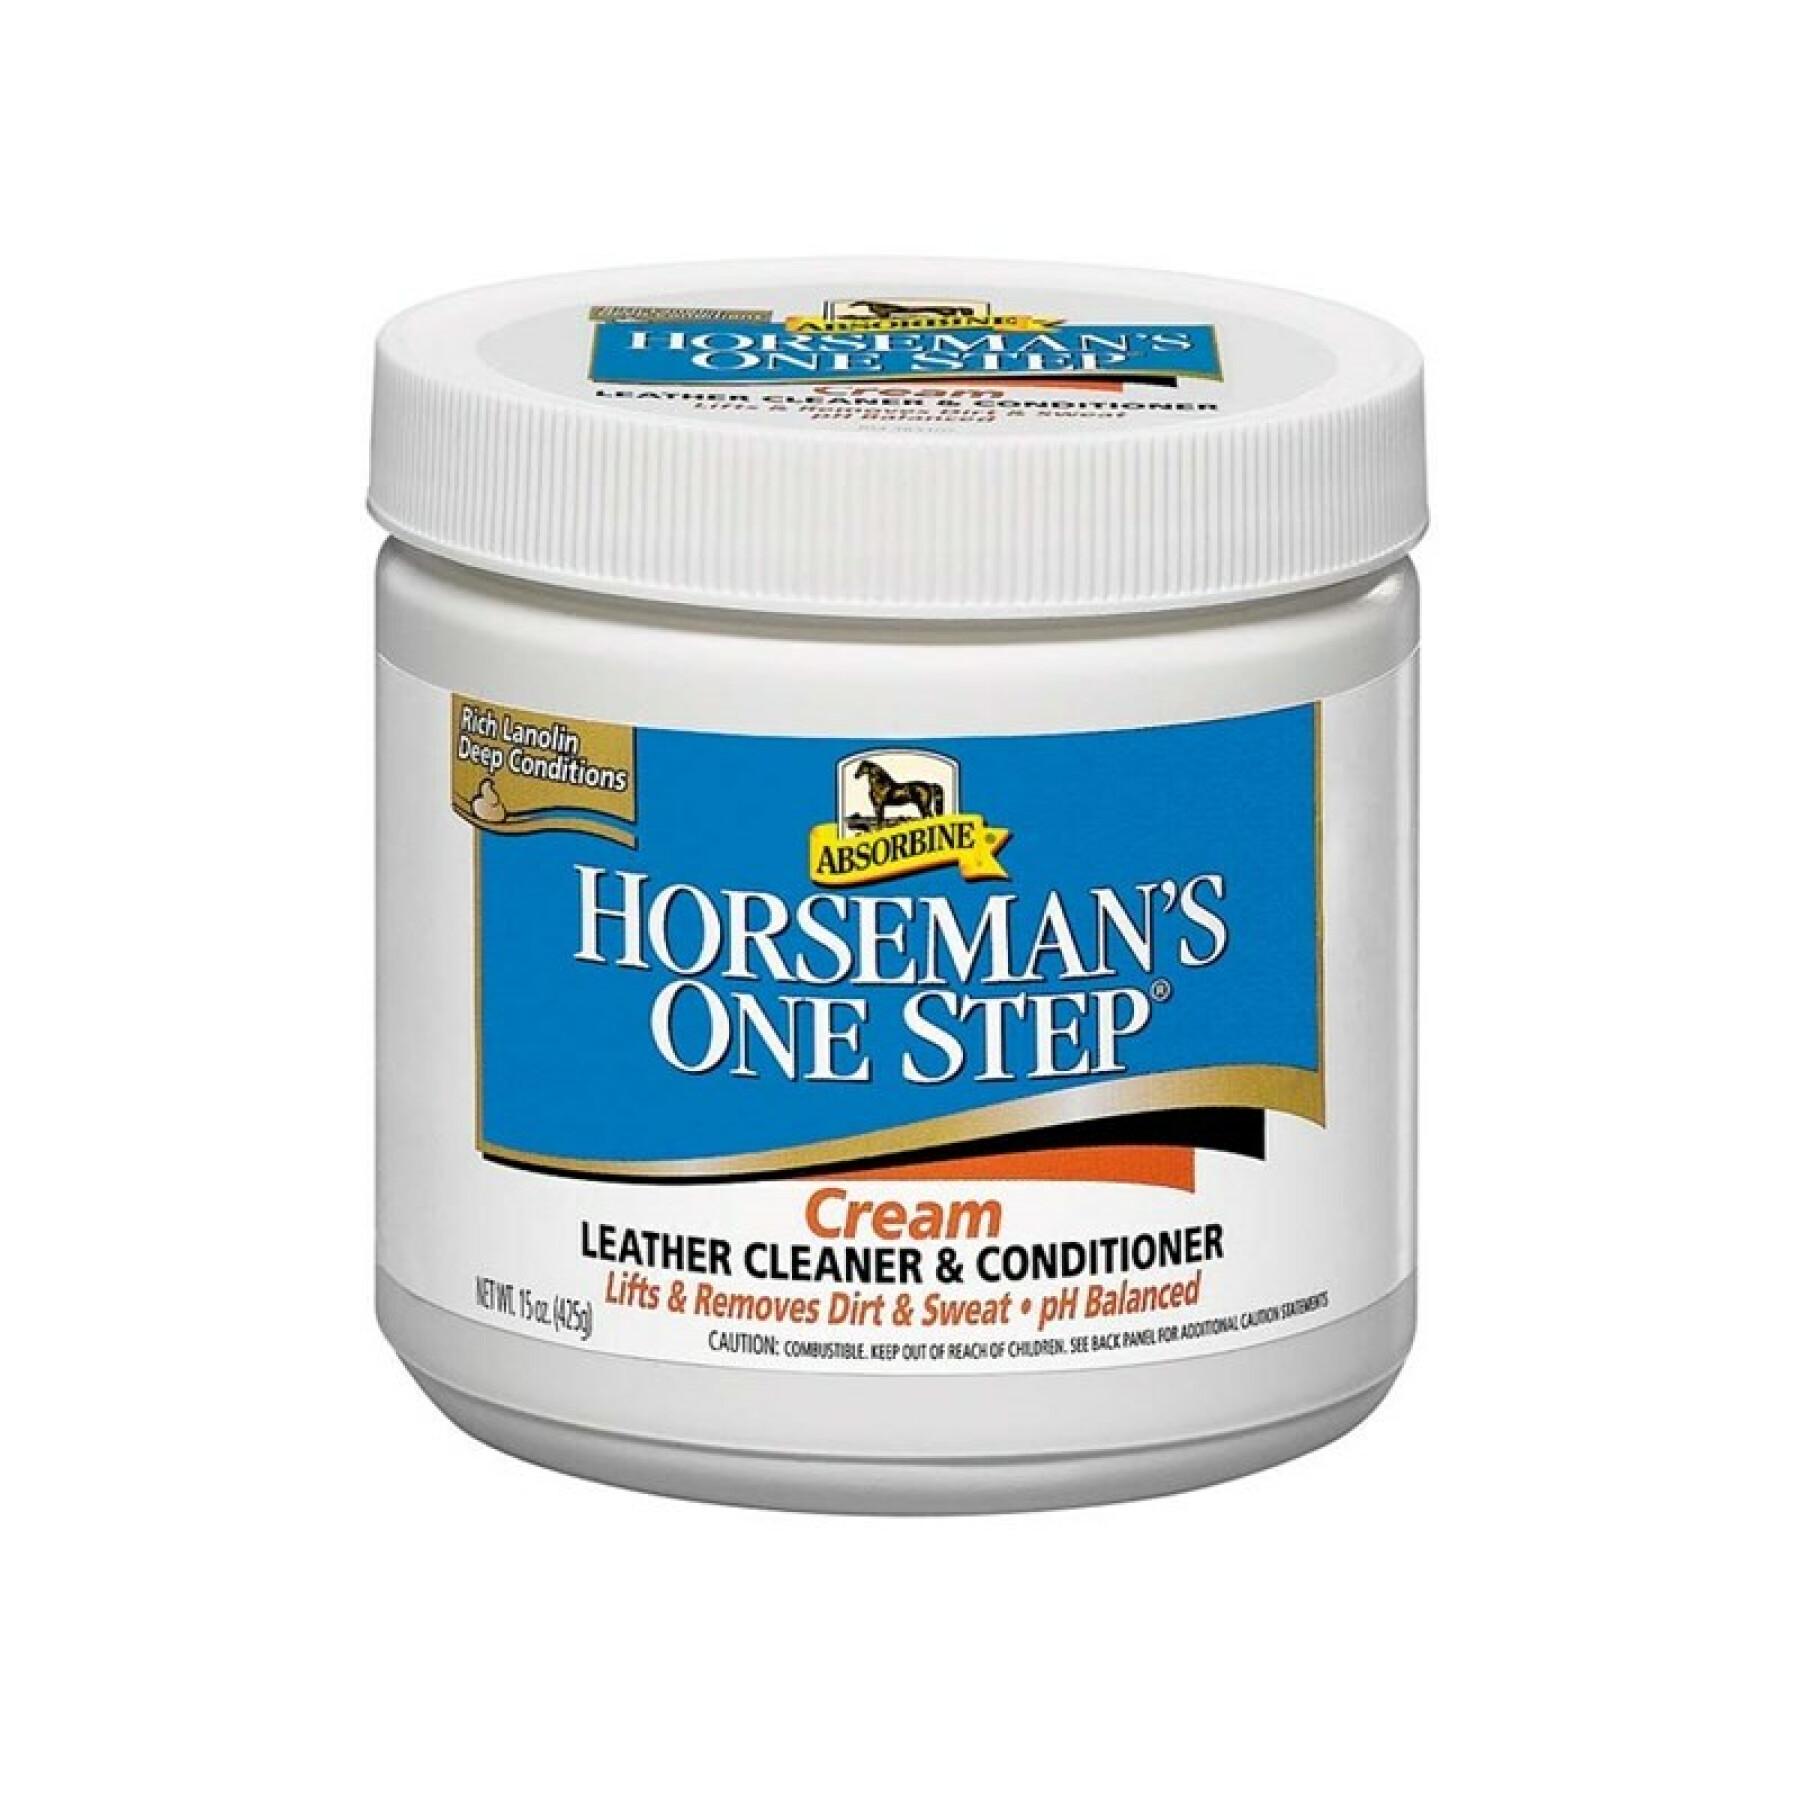 Pelle crema Absorbine Horseman's one step 425 g